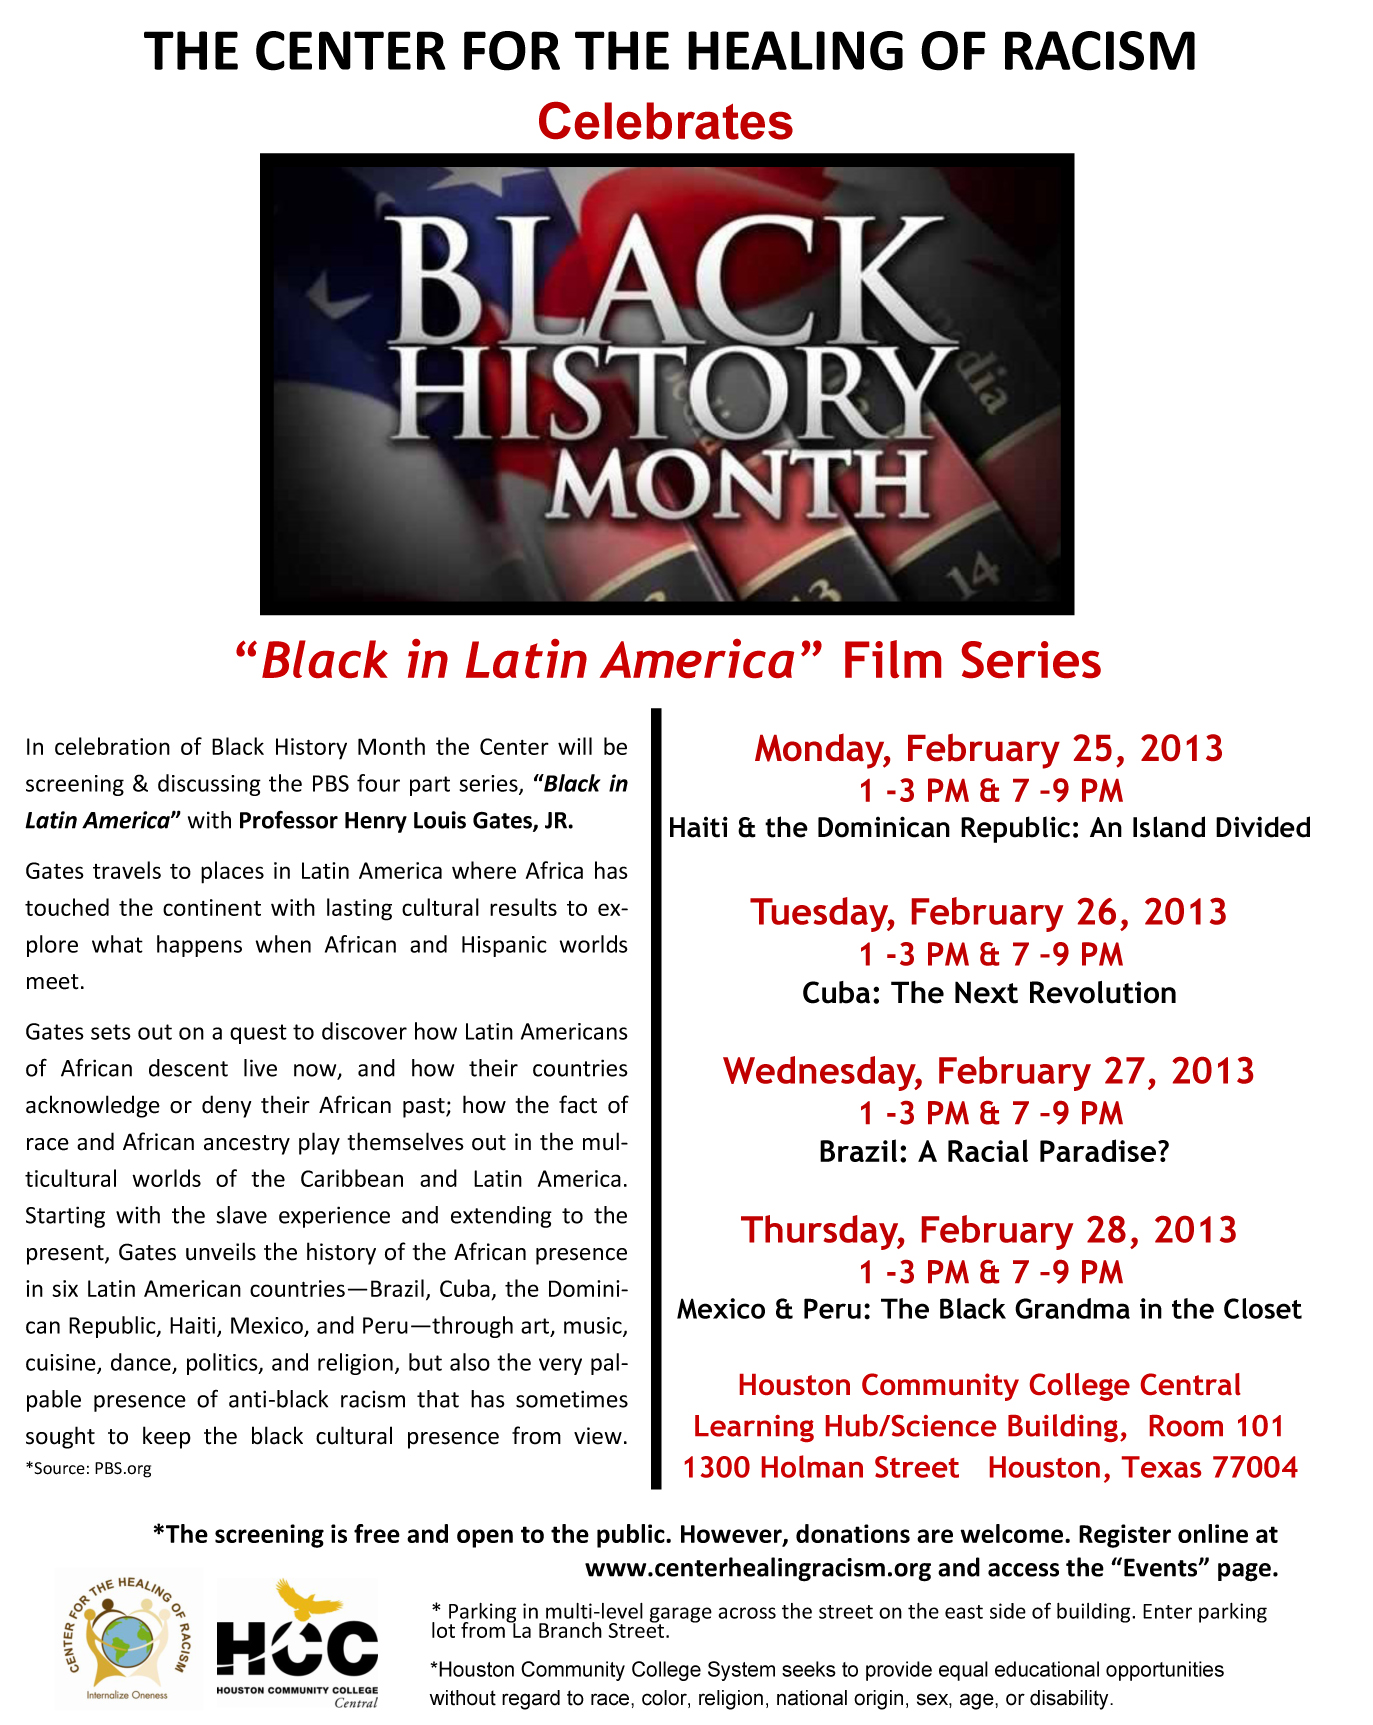 Black History Month “Black in Latin America” Film Series